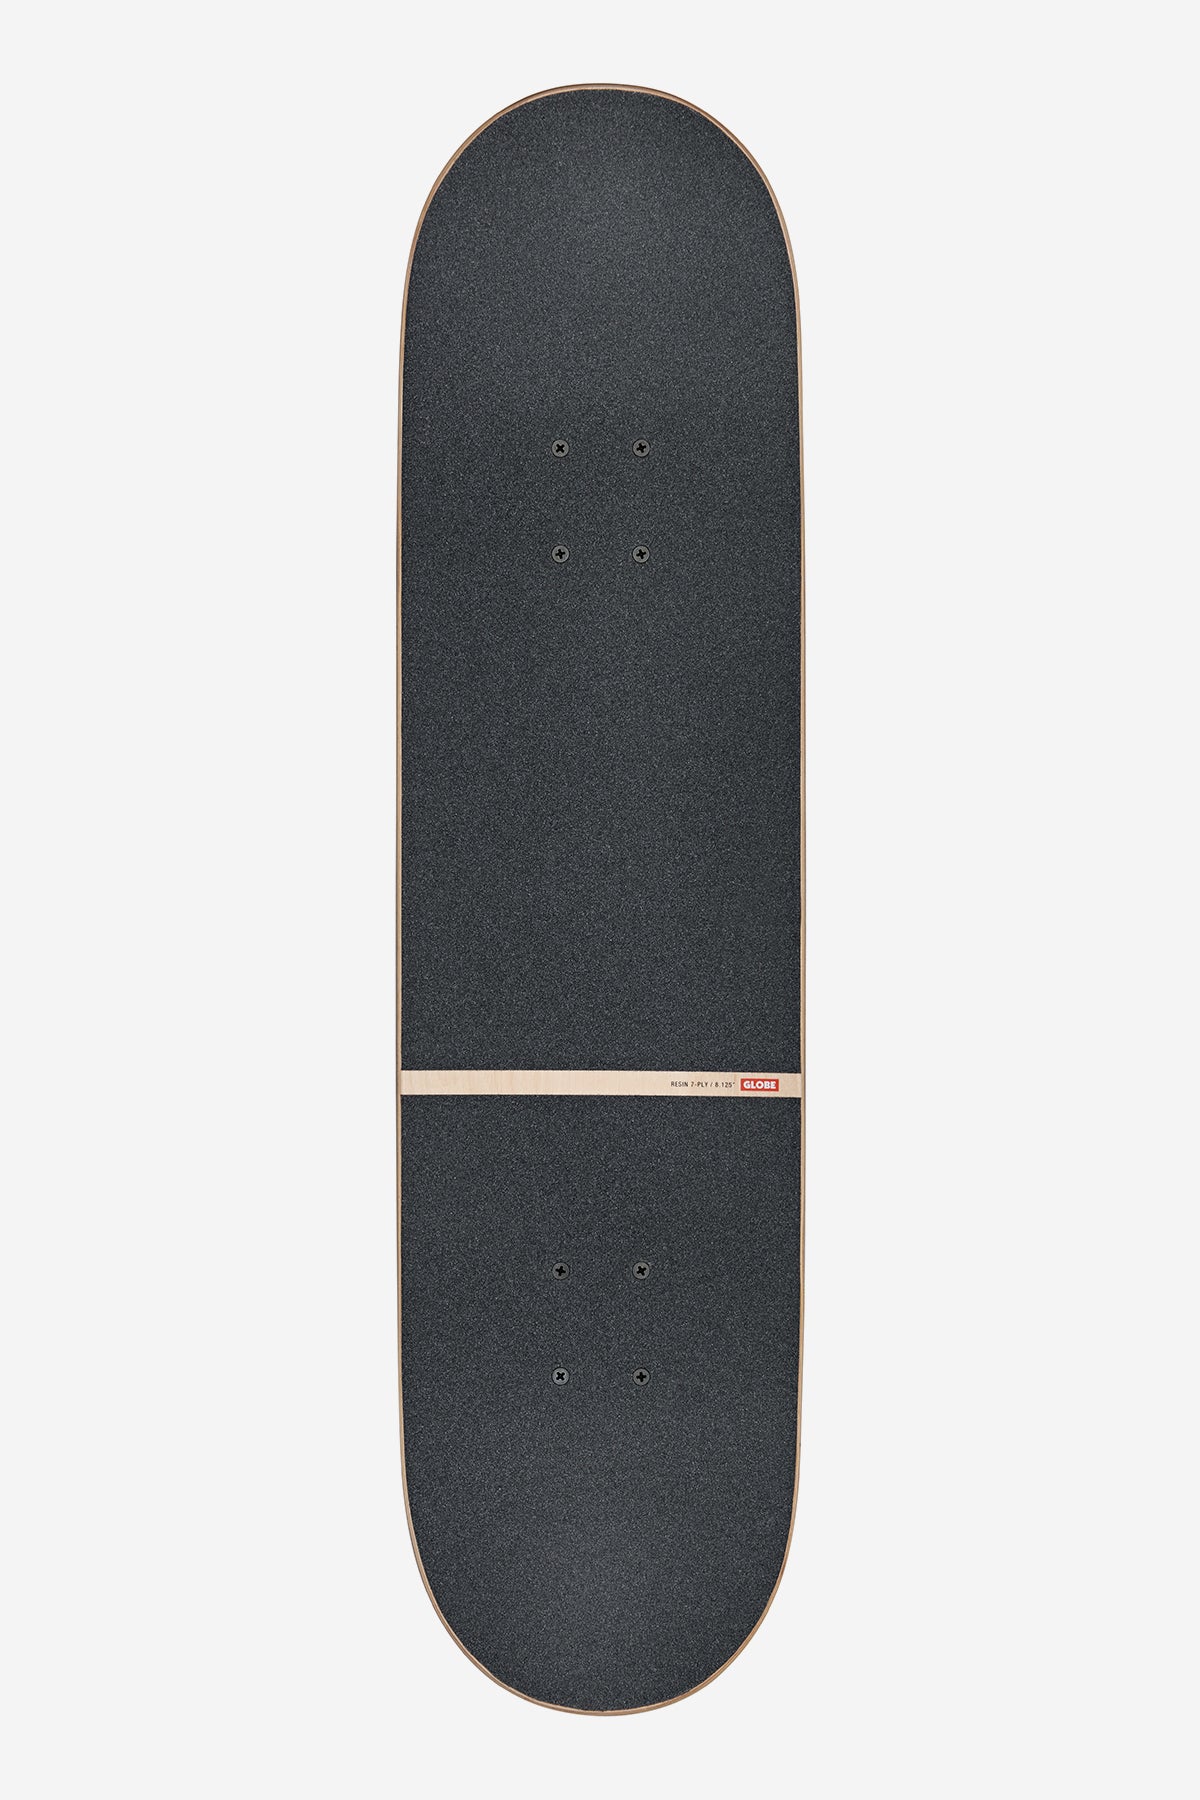 g1 slide stack dust 8.125" complete skateboard